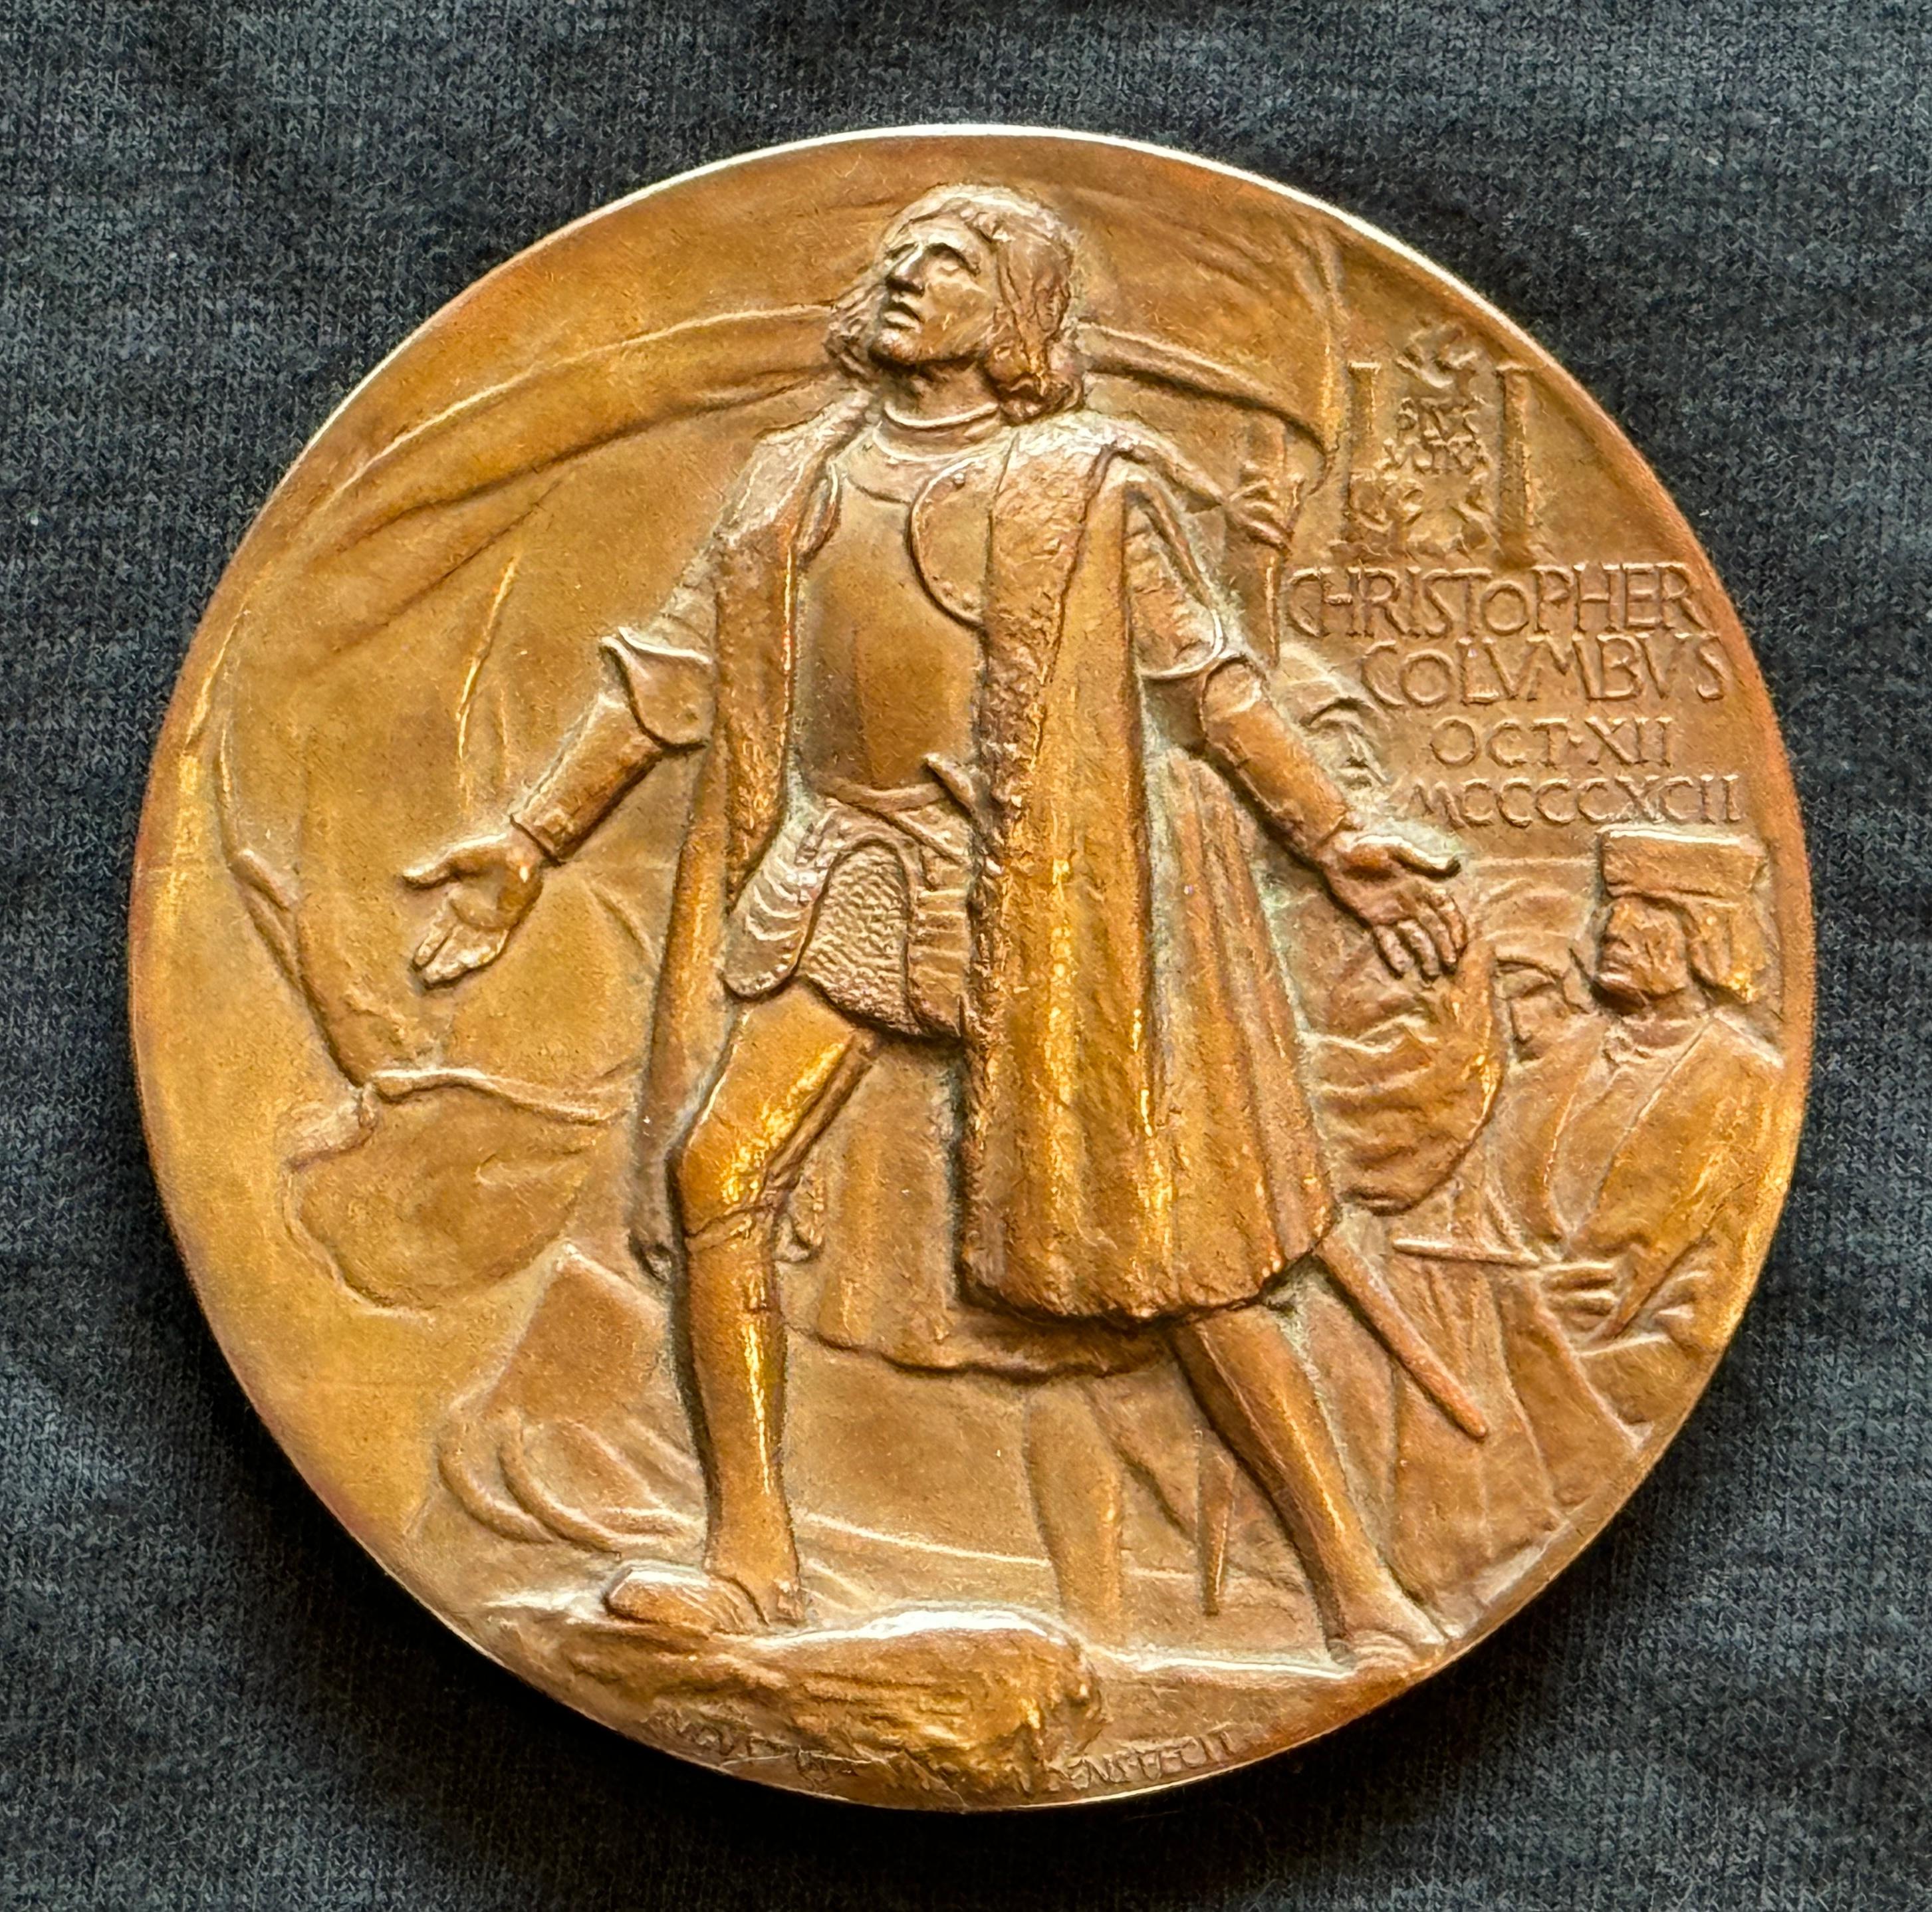 World's Columbian Exposition Commemorative Presentation Medal - Sculpture by Augustus Saint-Gaudens